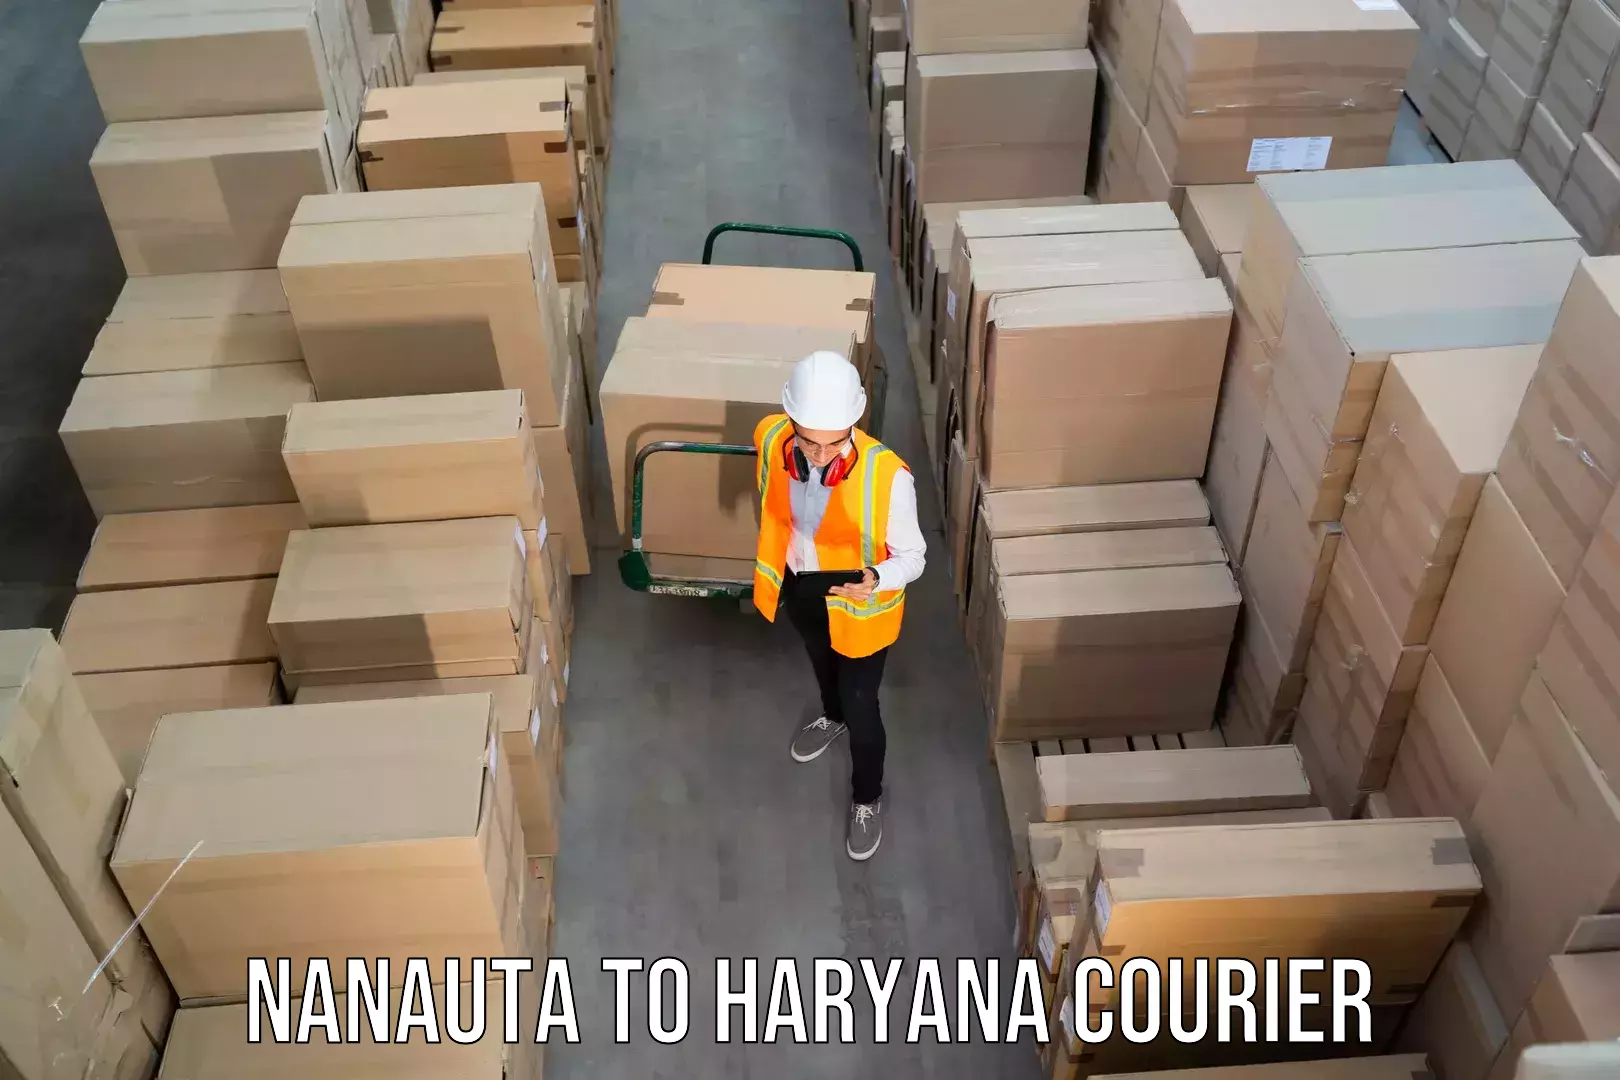 On-call courier service Nanauta to Haryana